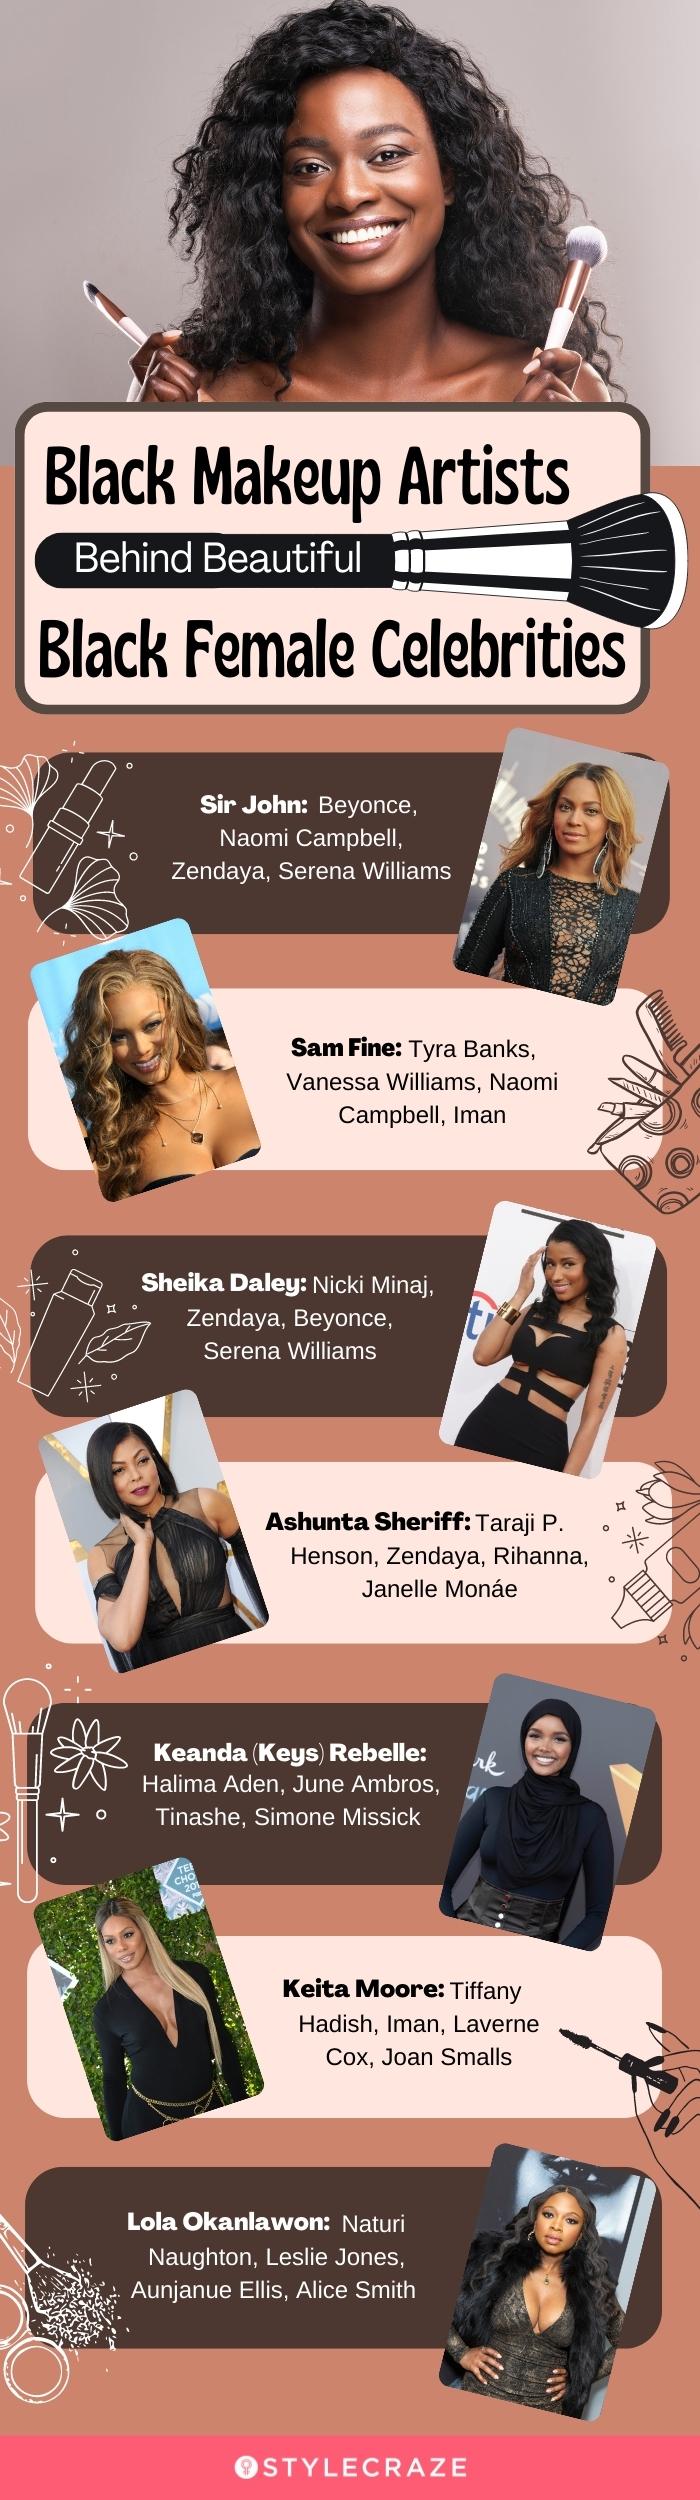 black makeup artists behind beautiful black female celebrities [infographic]